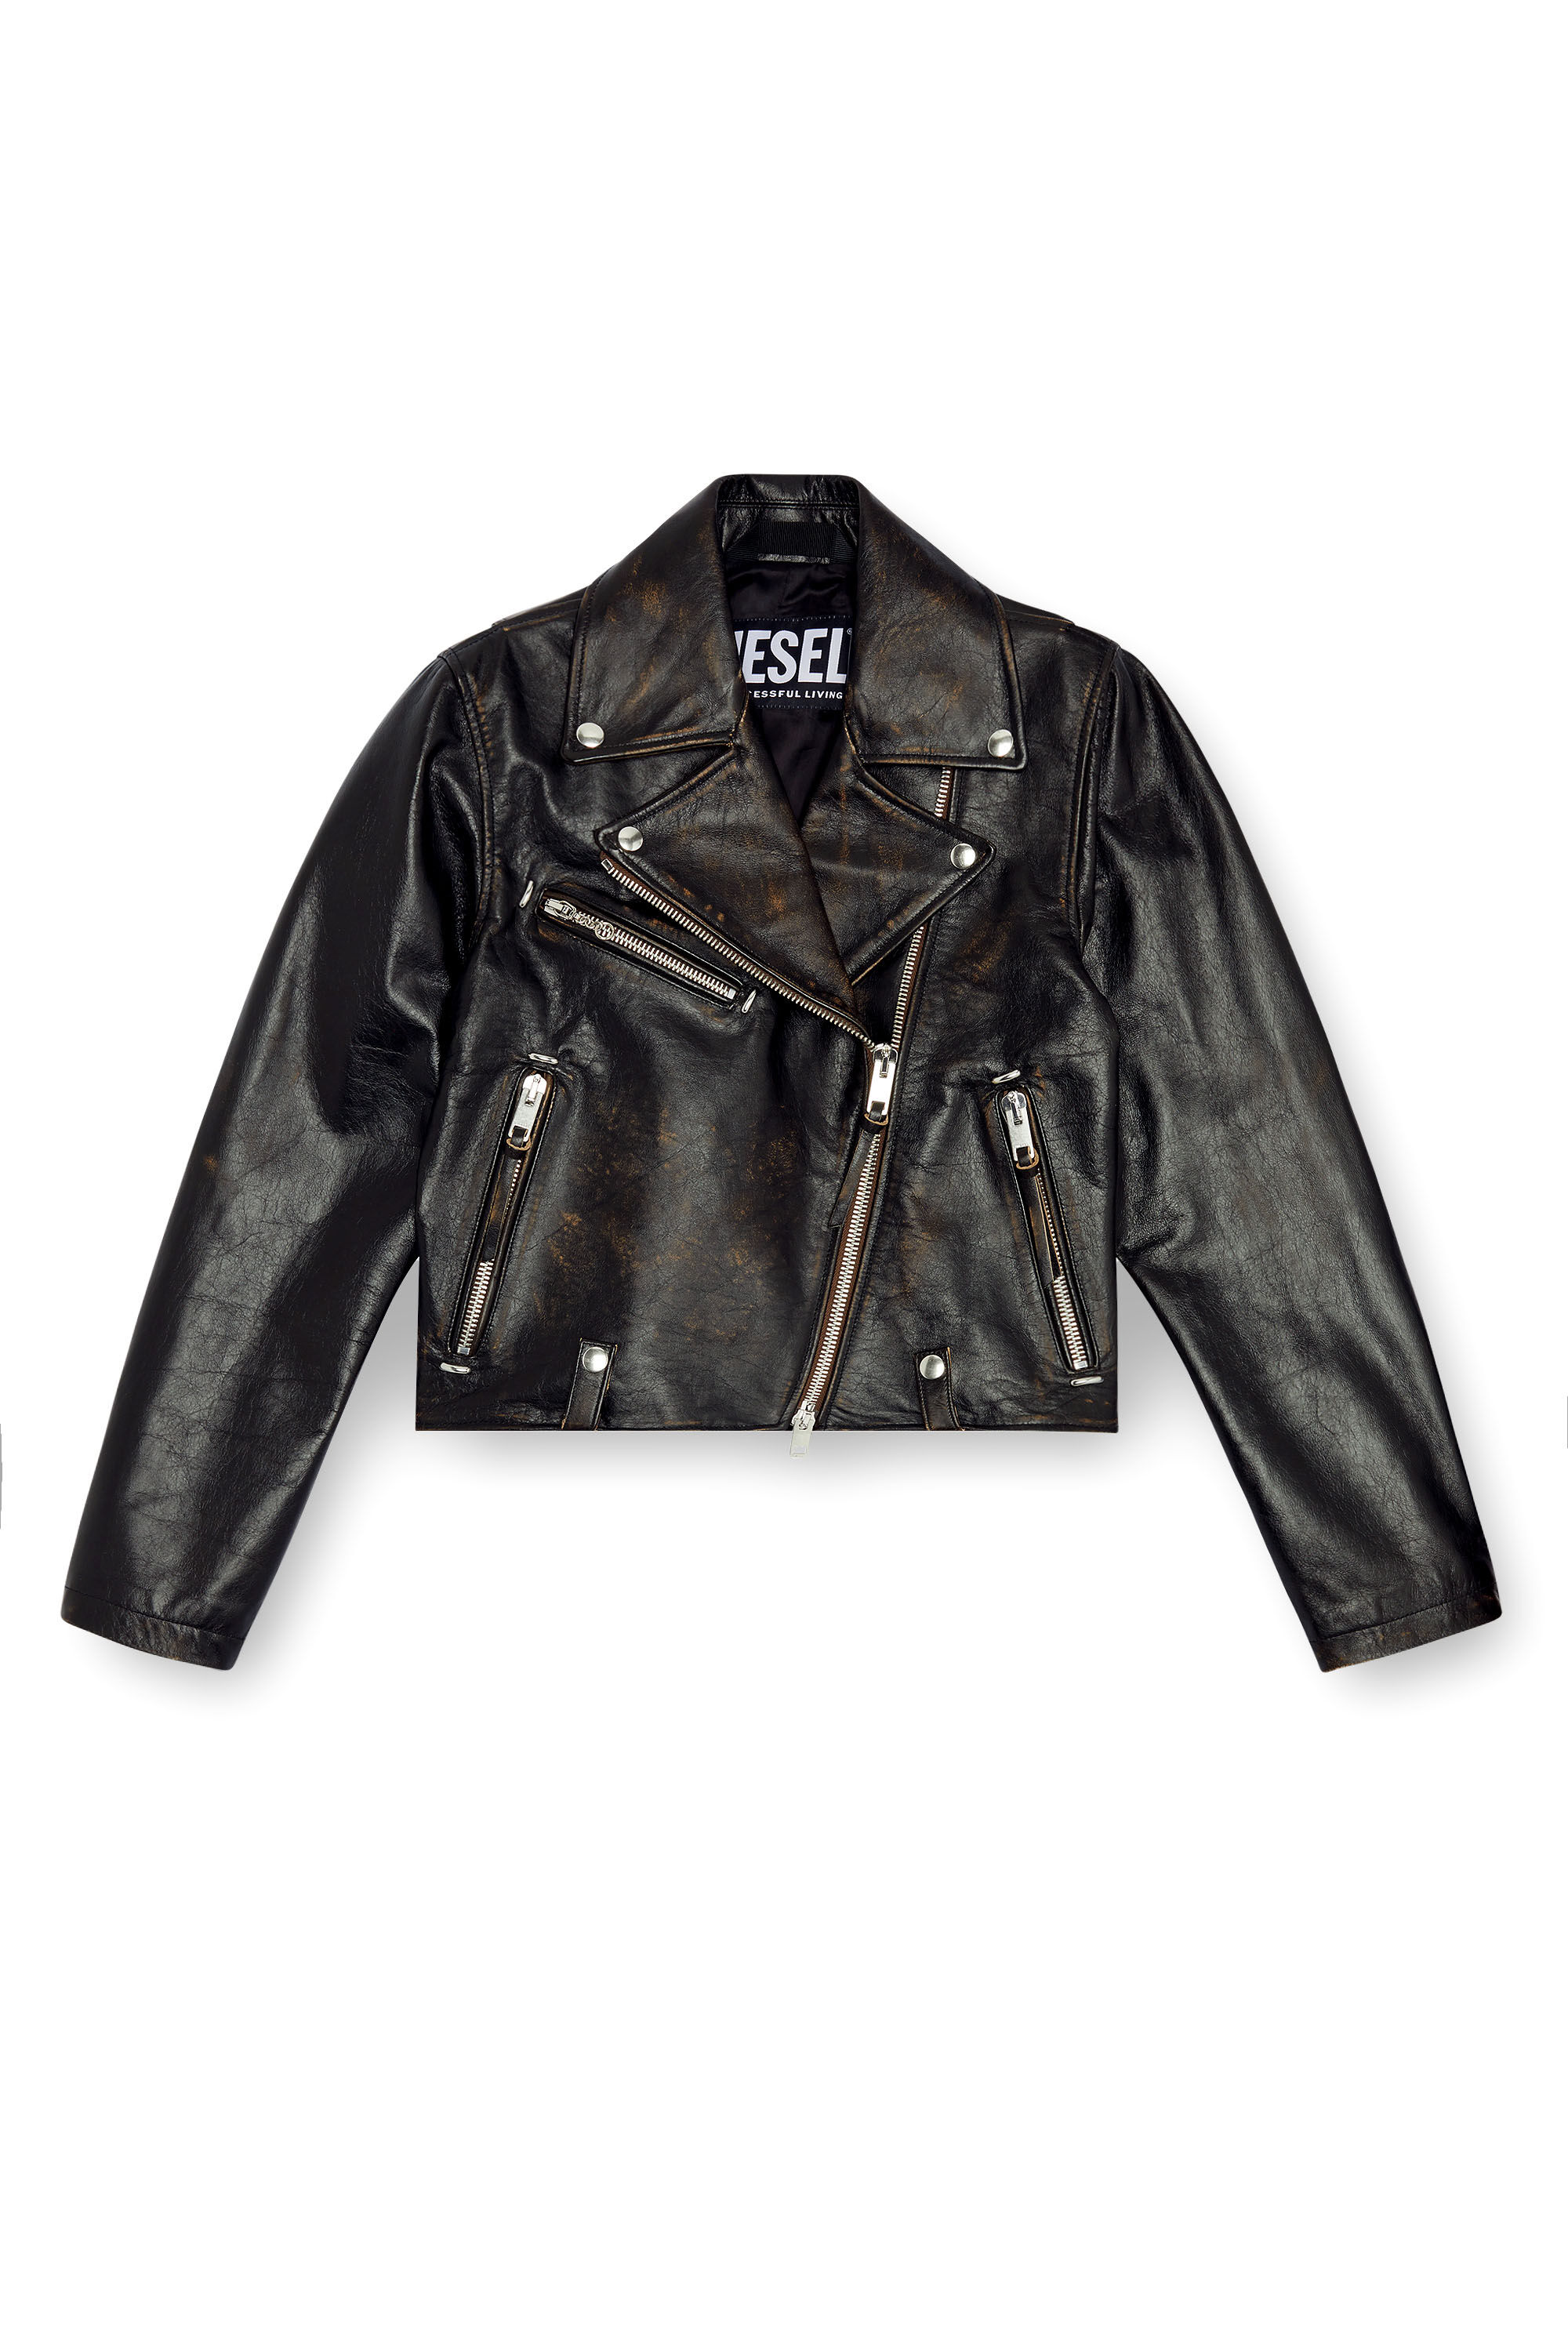 Diesel - L-EDMEA-CL, Woman Biker jacket in treated leather in Black - Image 2